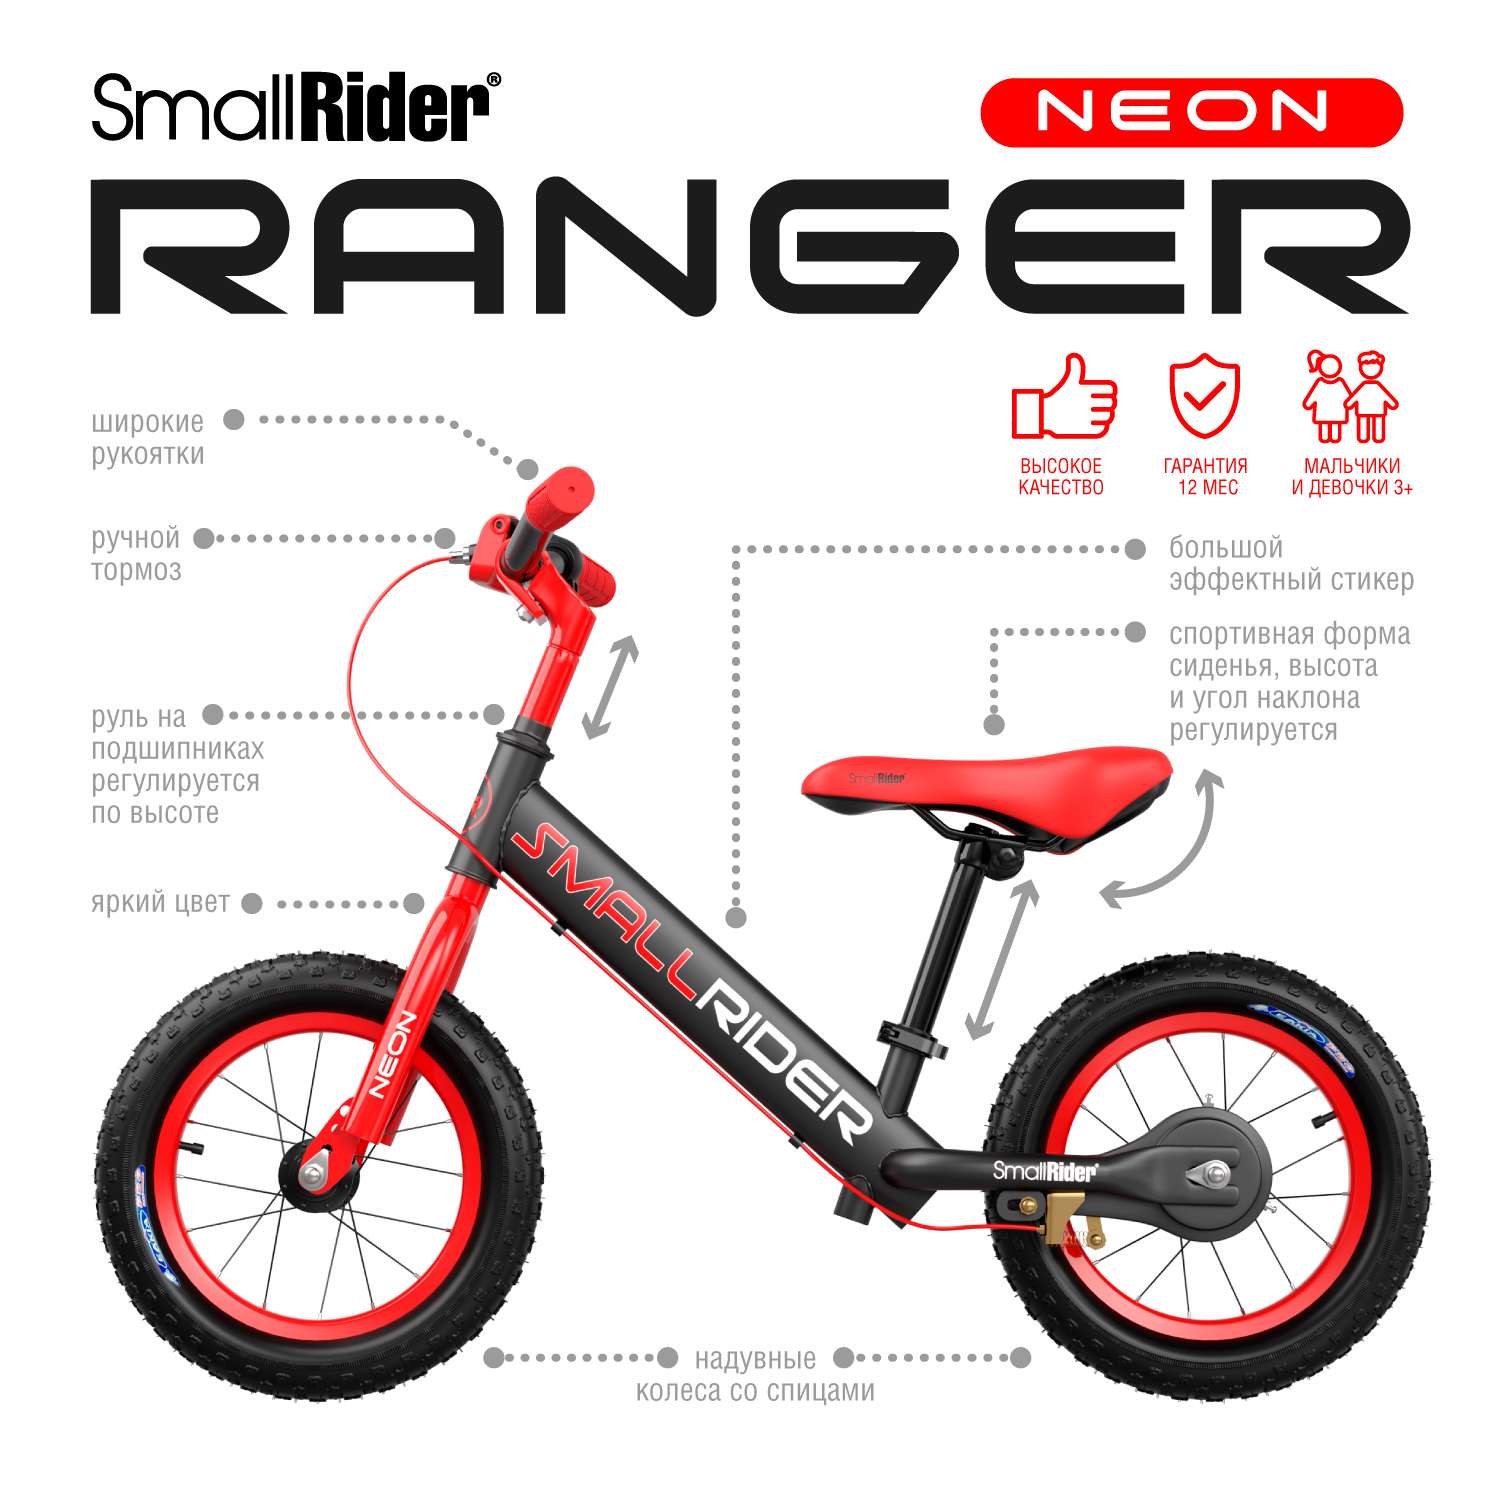 Беговел Small Rider Ranger 3 Neon красный - фото 2